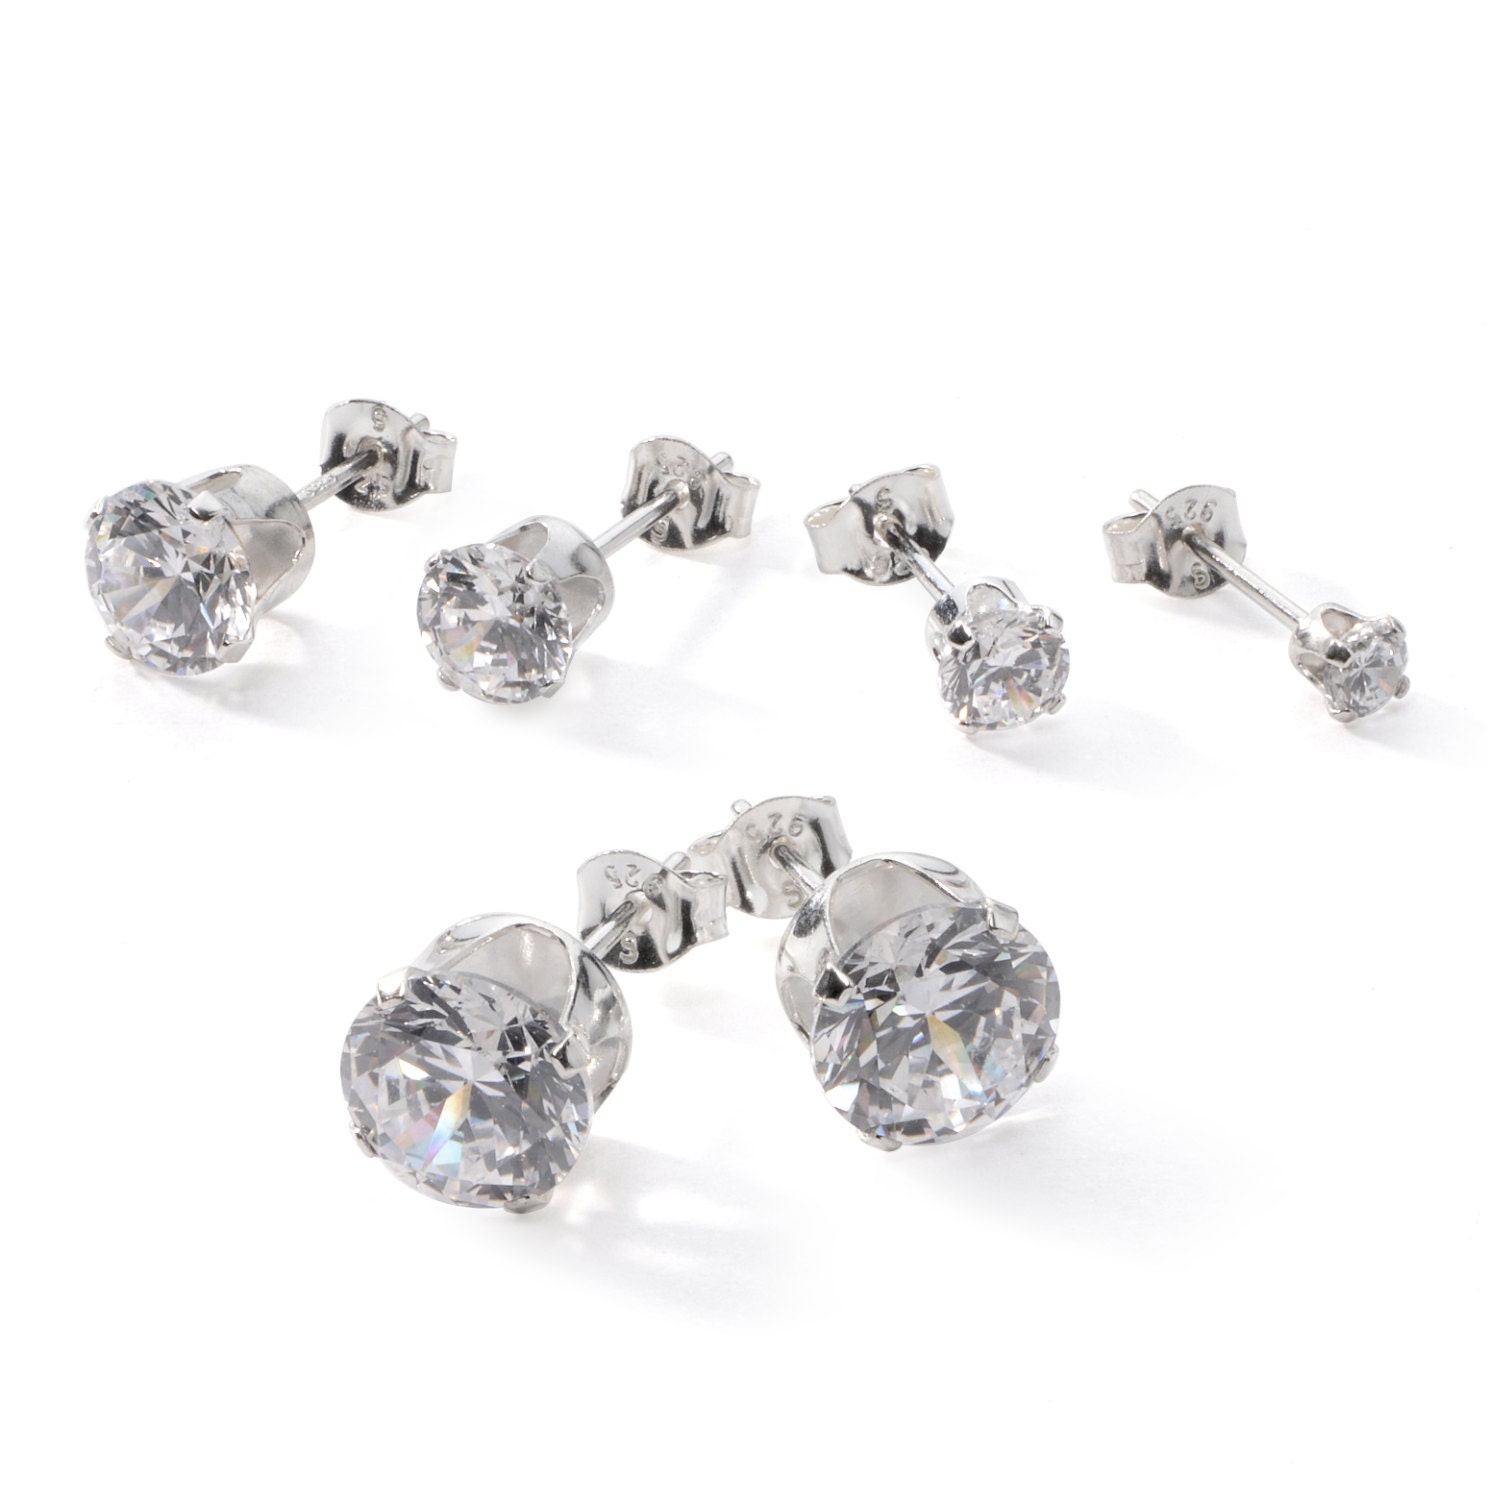 5 Pair Set of sterling Silver CZ Stud Earrings 3mm by JewelryTrain